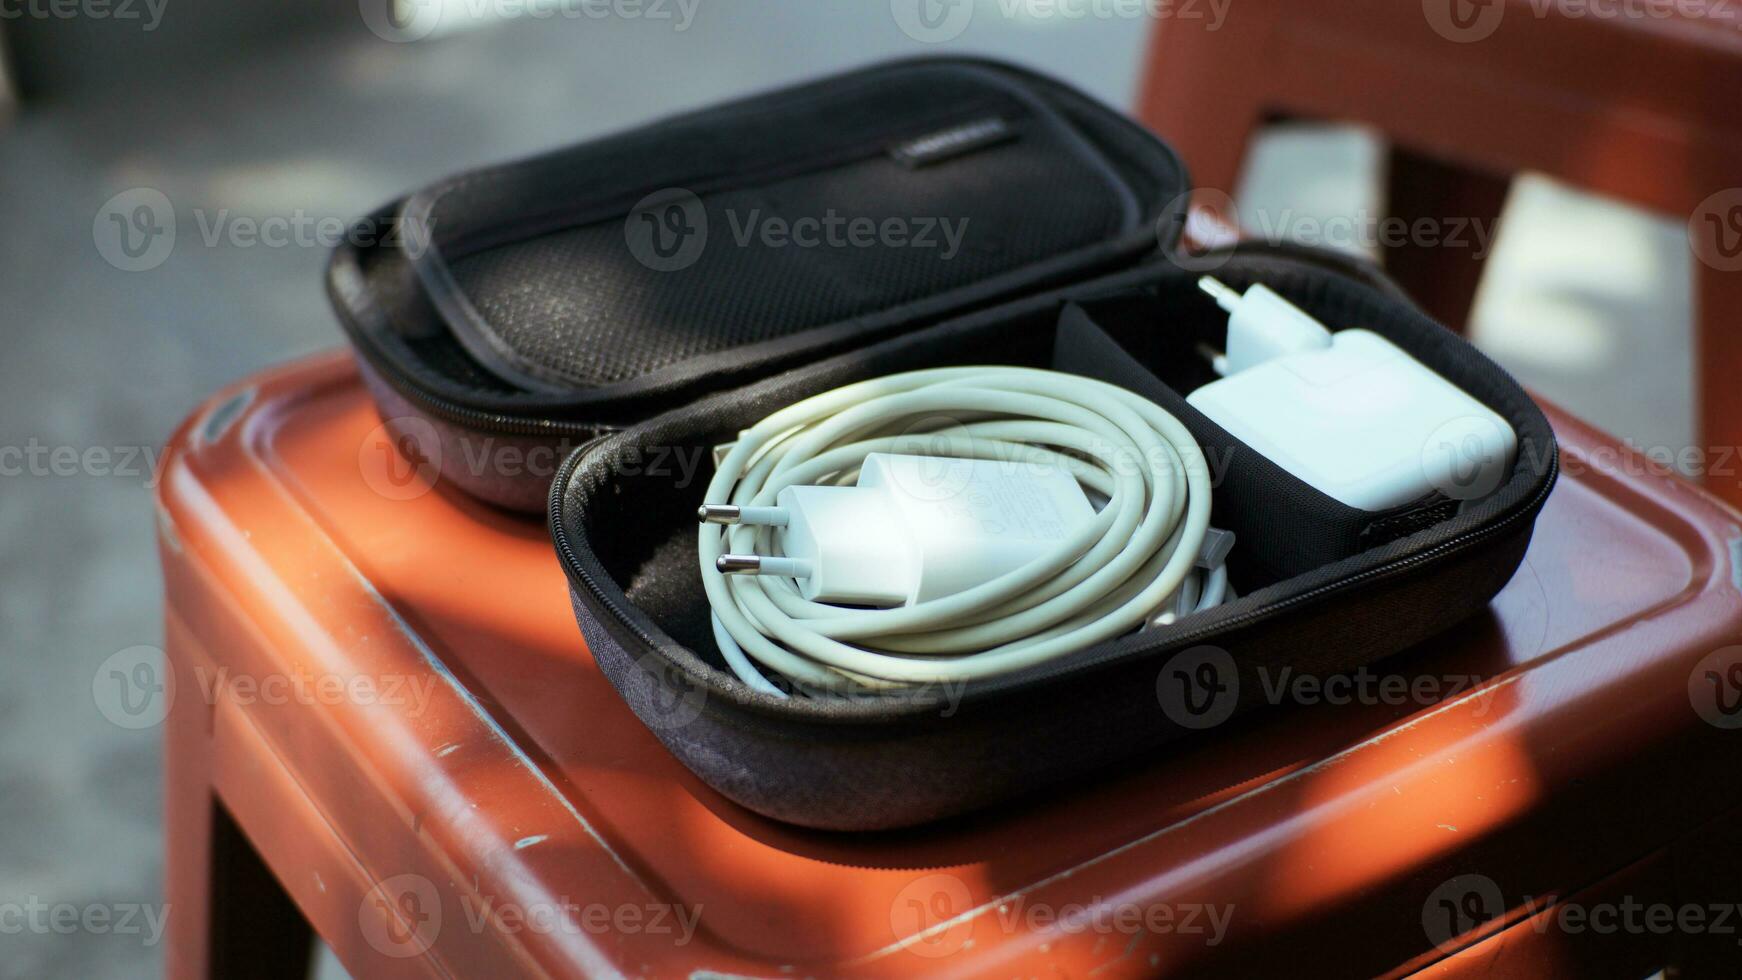 moderno bolso para profesional almacenamiento de cables, cargando equipo o electrónico equipo durante viaje o viajar. foto